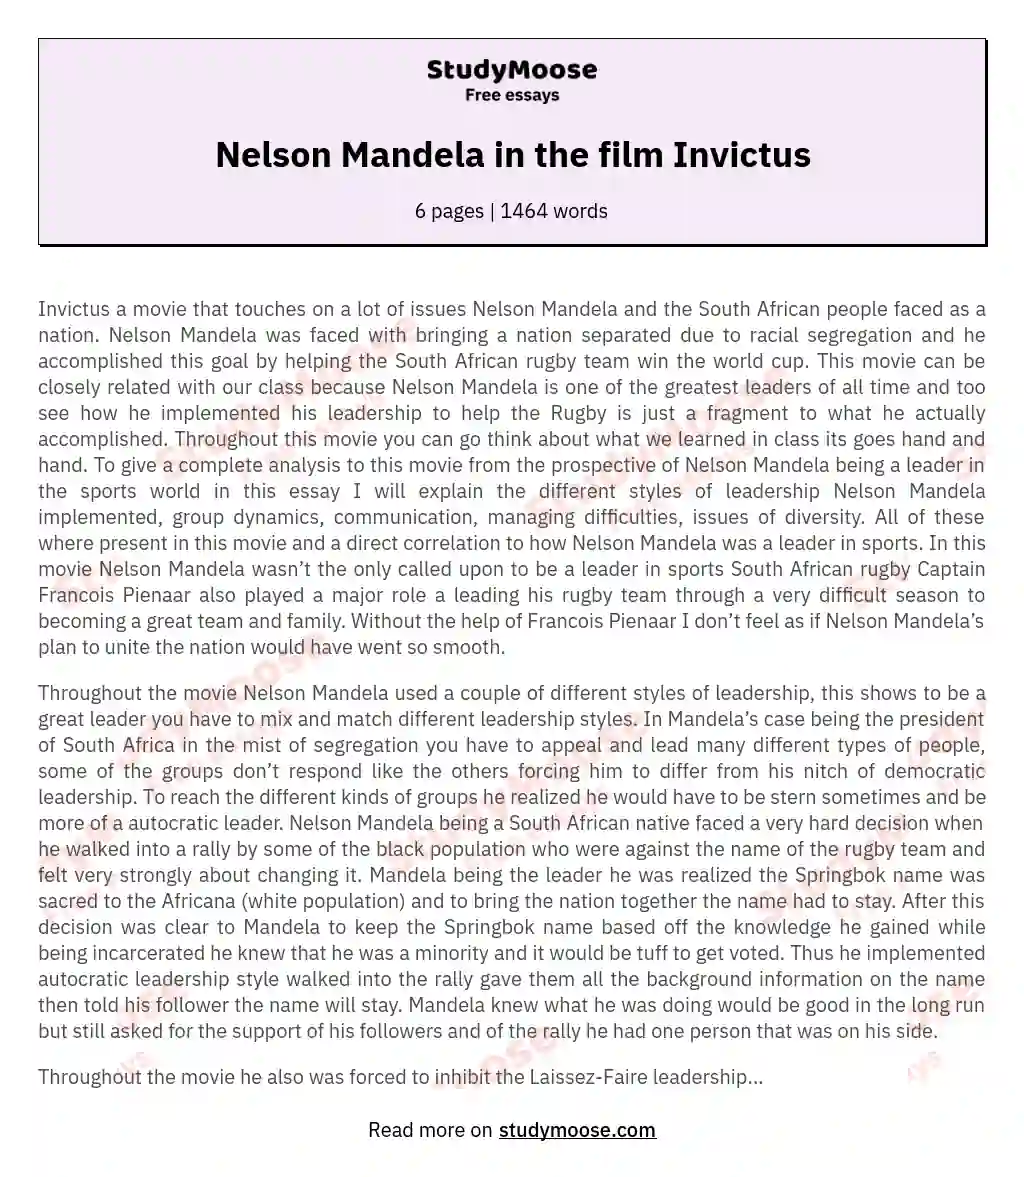 Nelson Mandela in the film Invictus